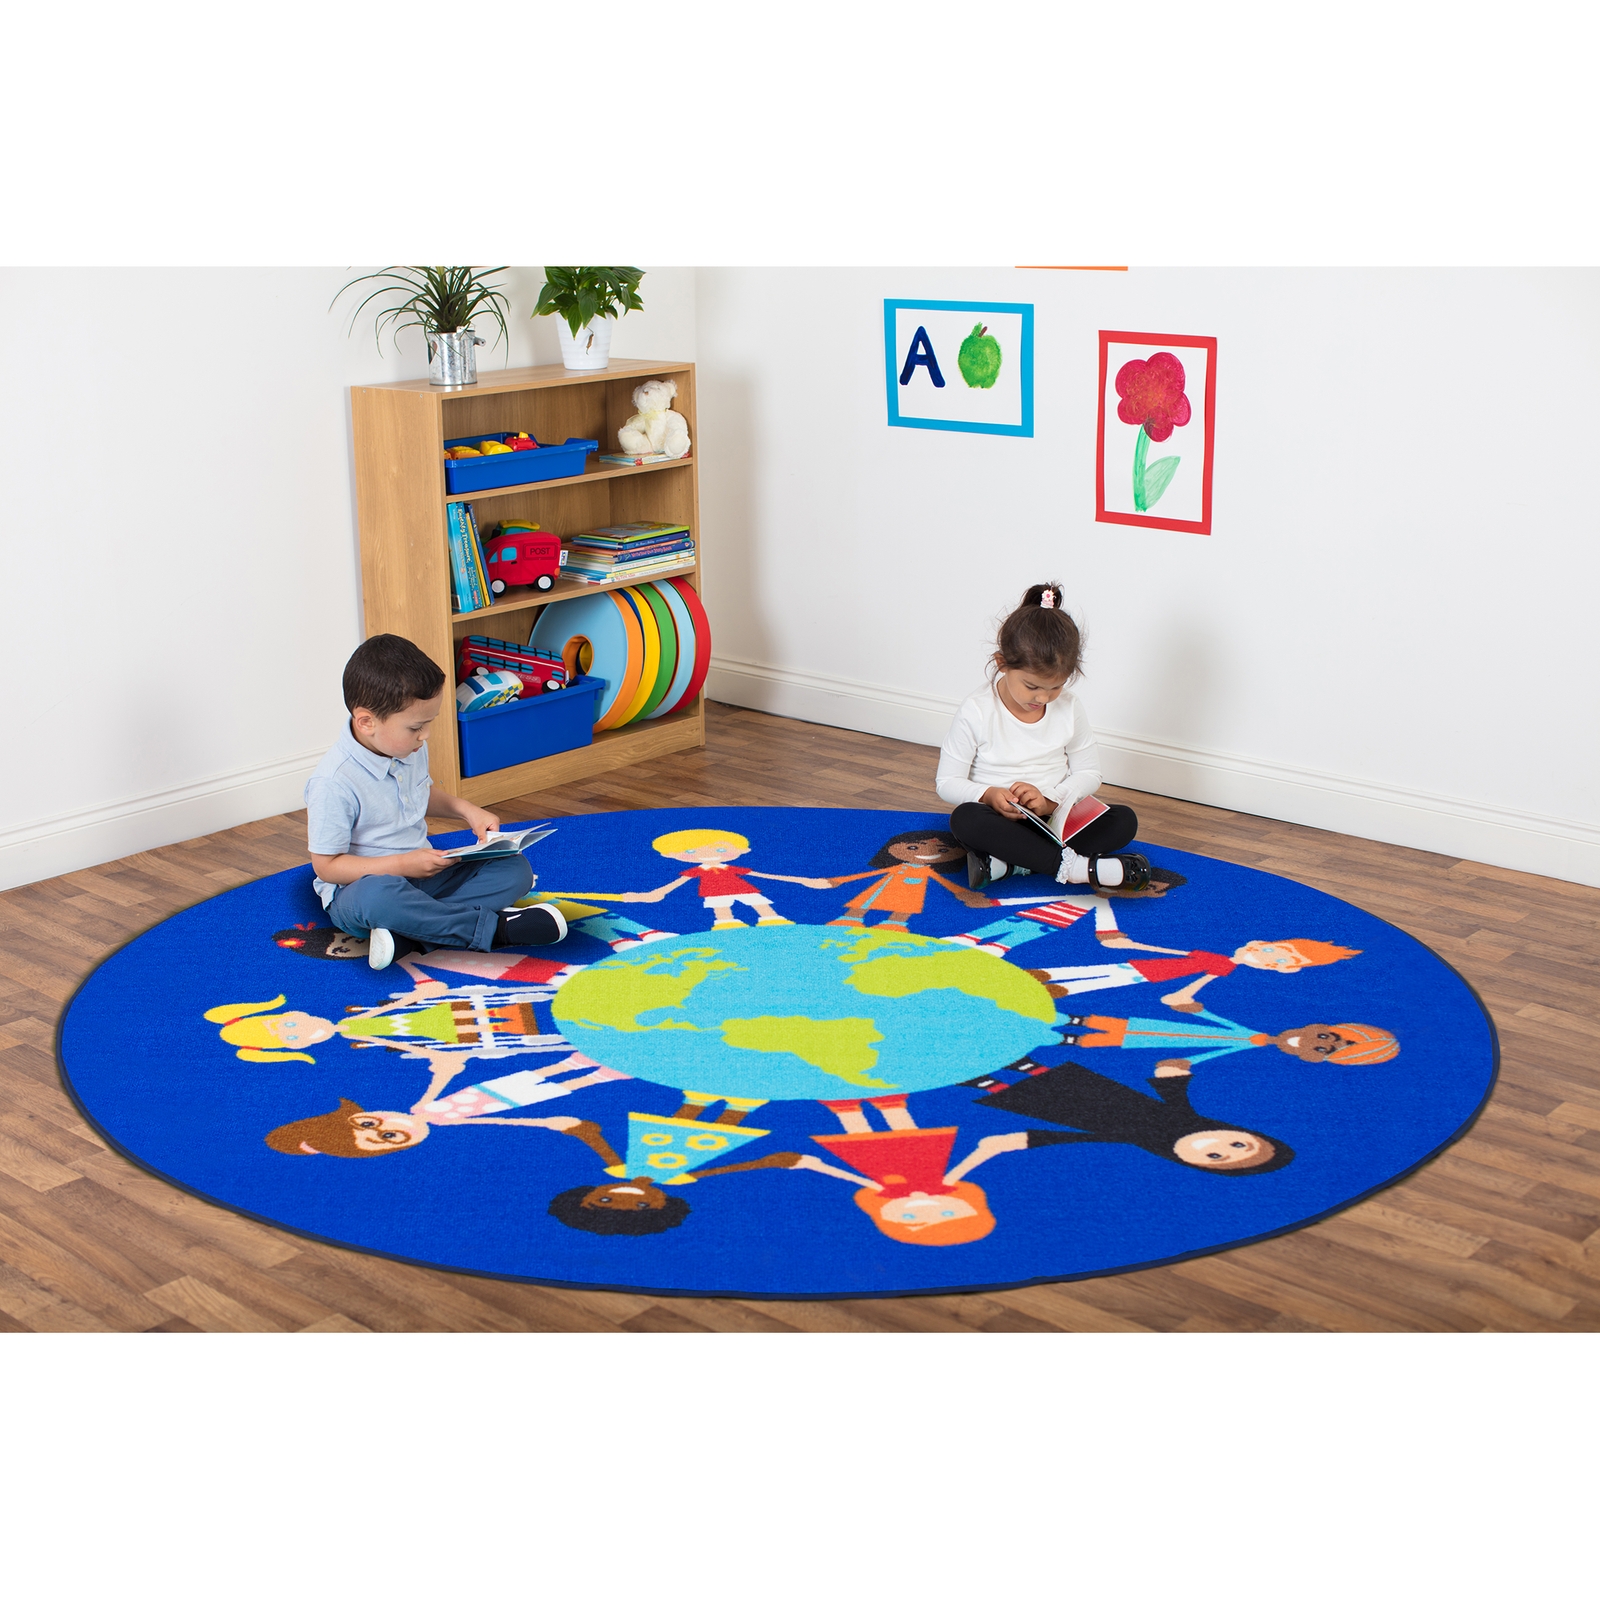 Children of the World Large Multi-Cultural Carpet - 3m Diameter - Each